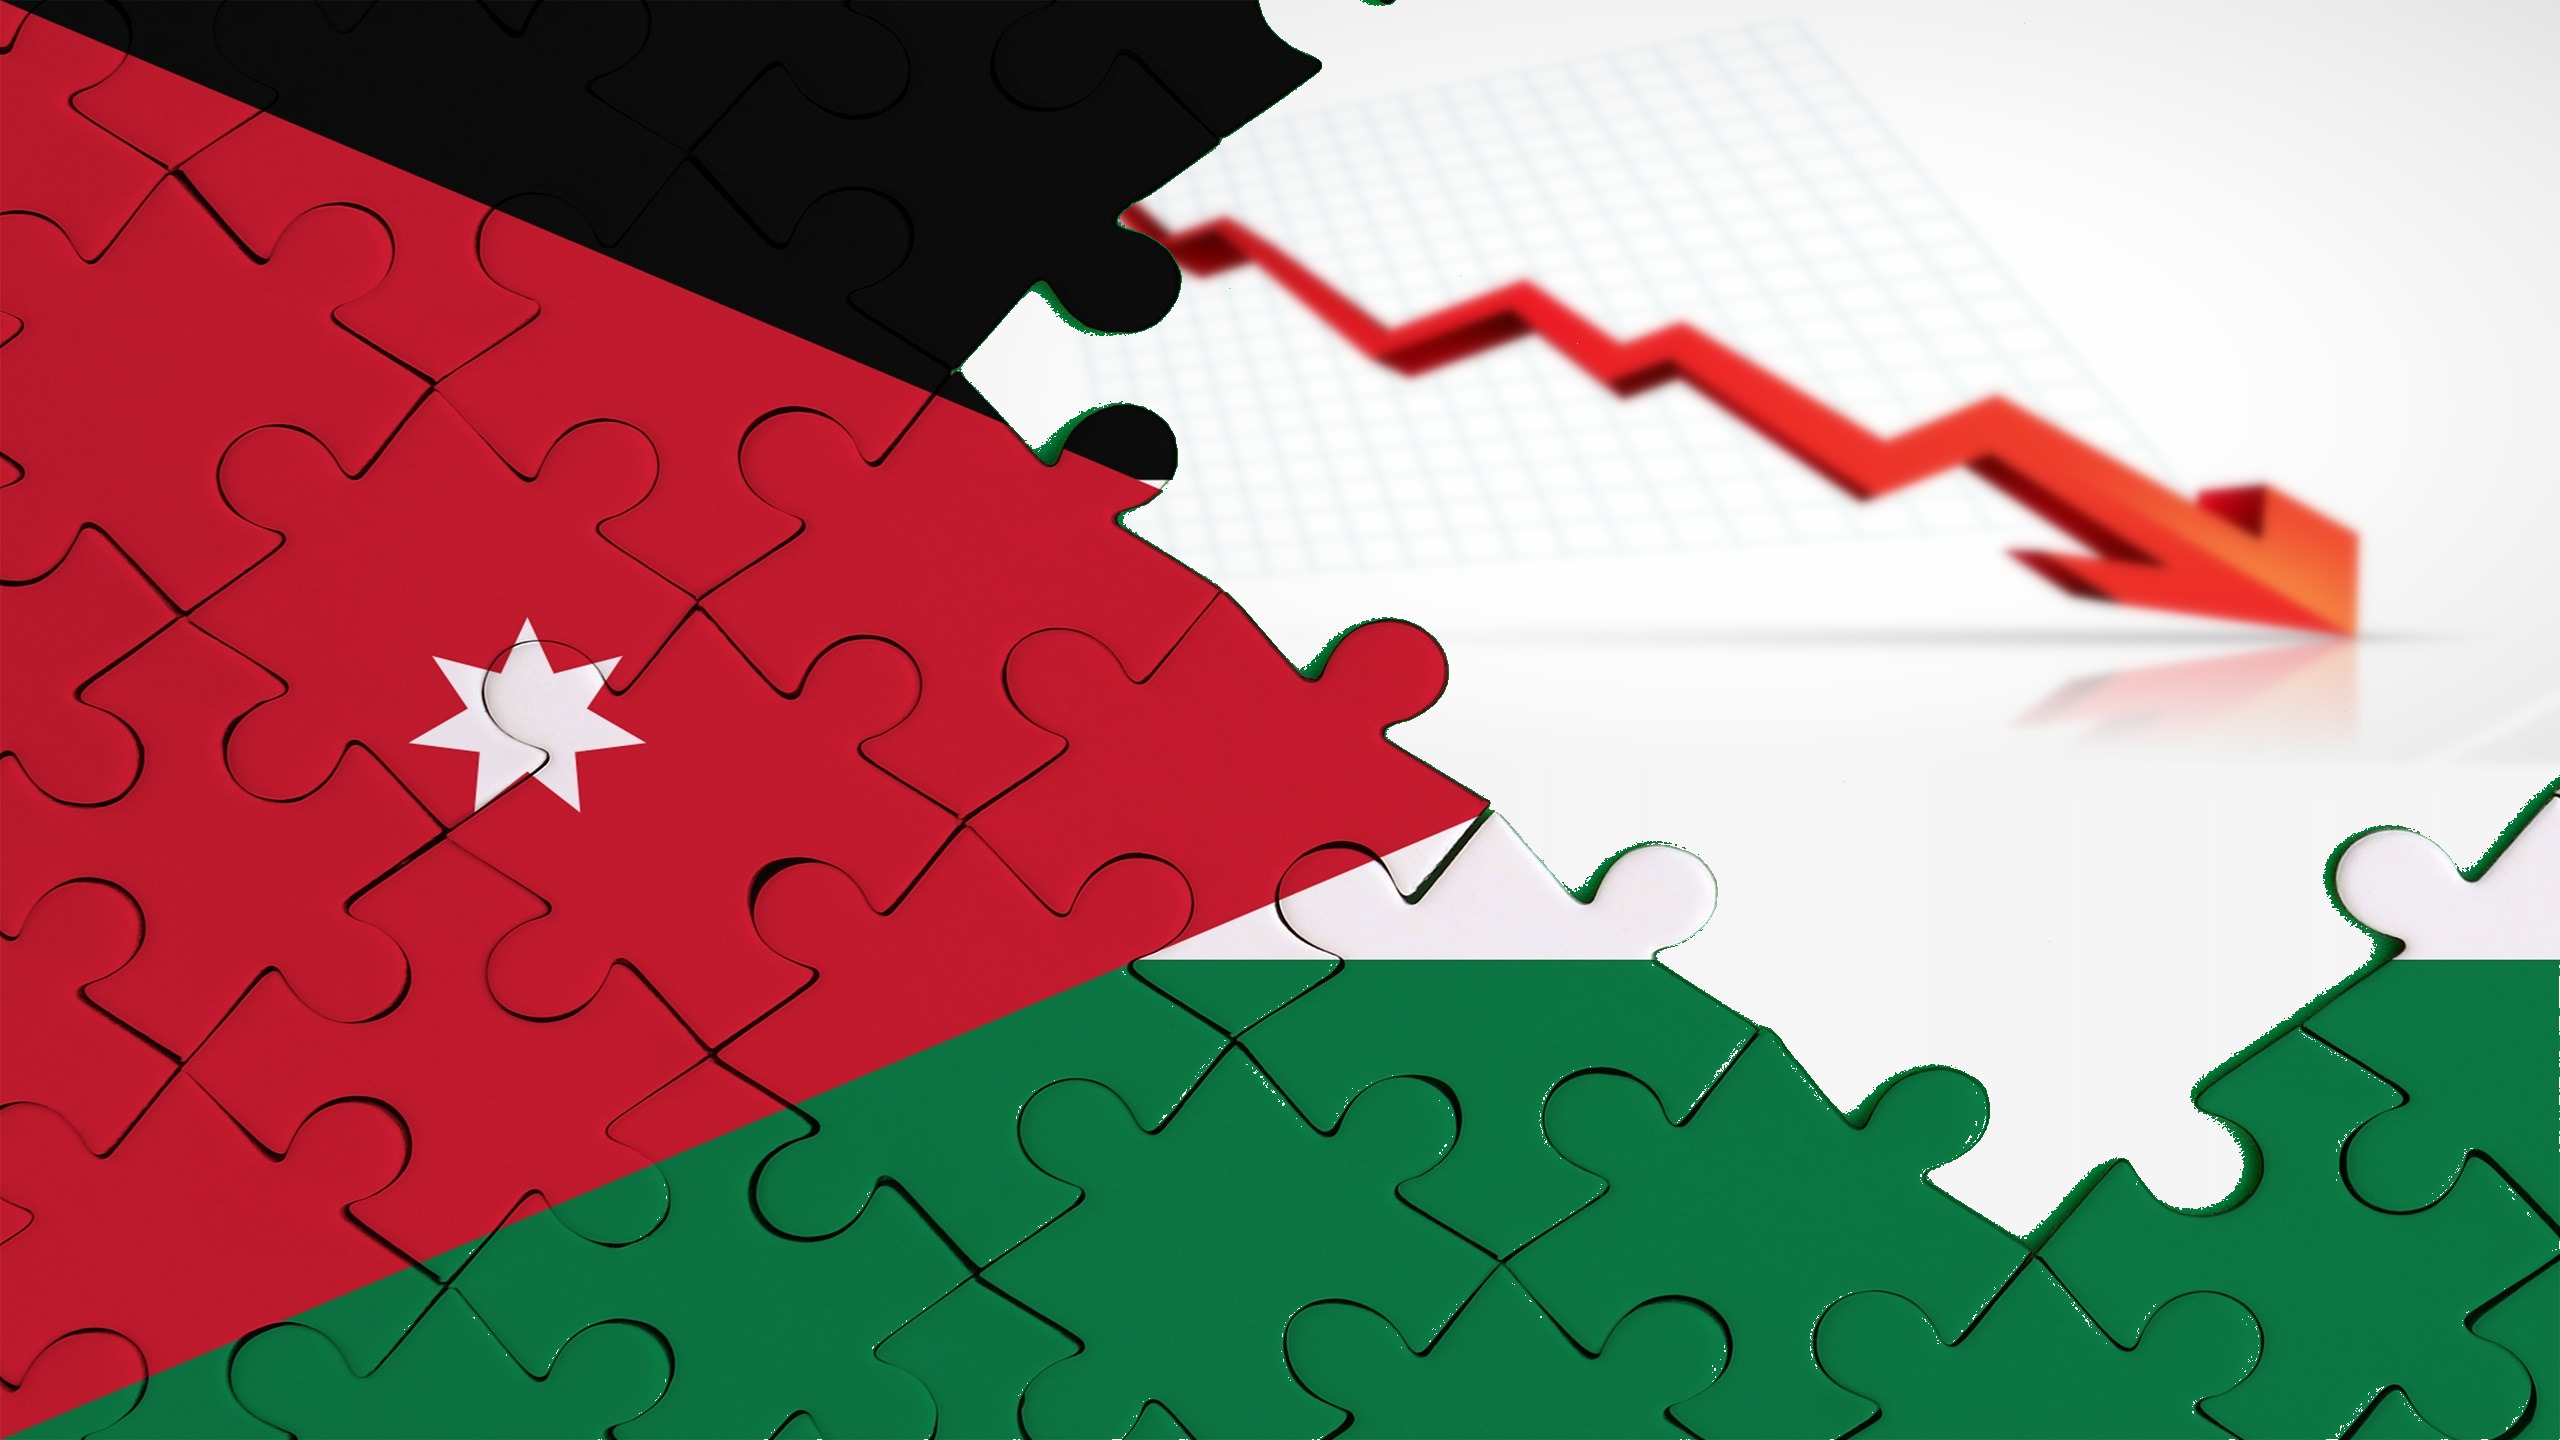 Jordan’s Political Positions Have Cost Kingdom Economically